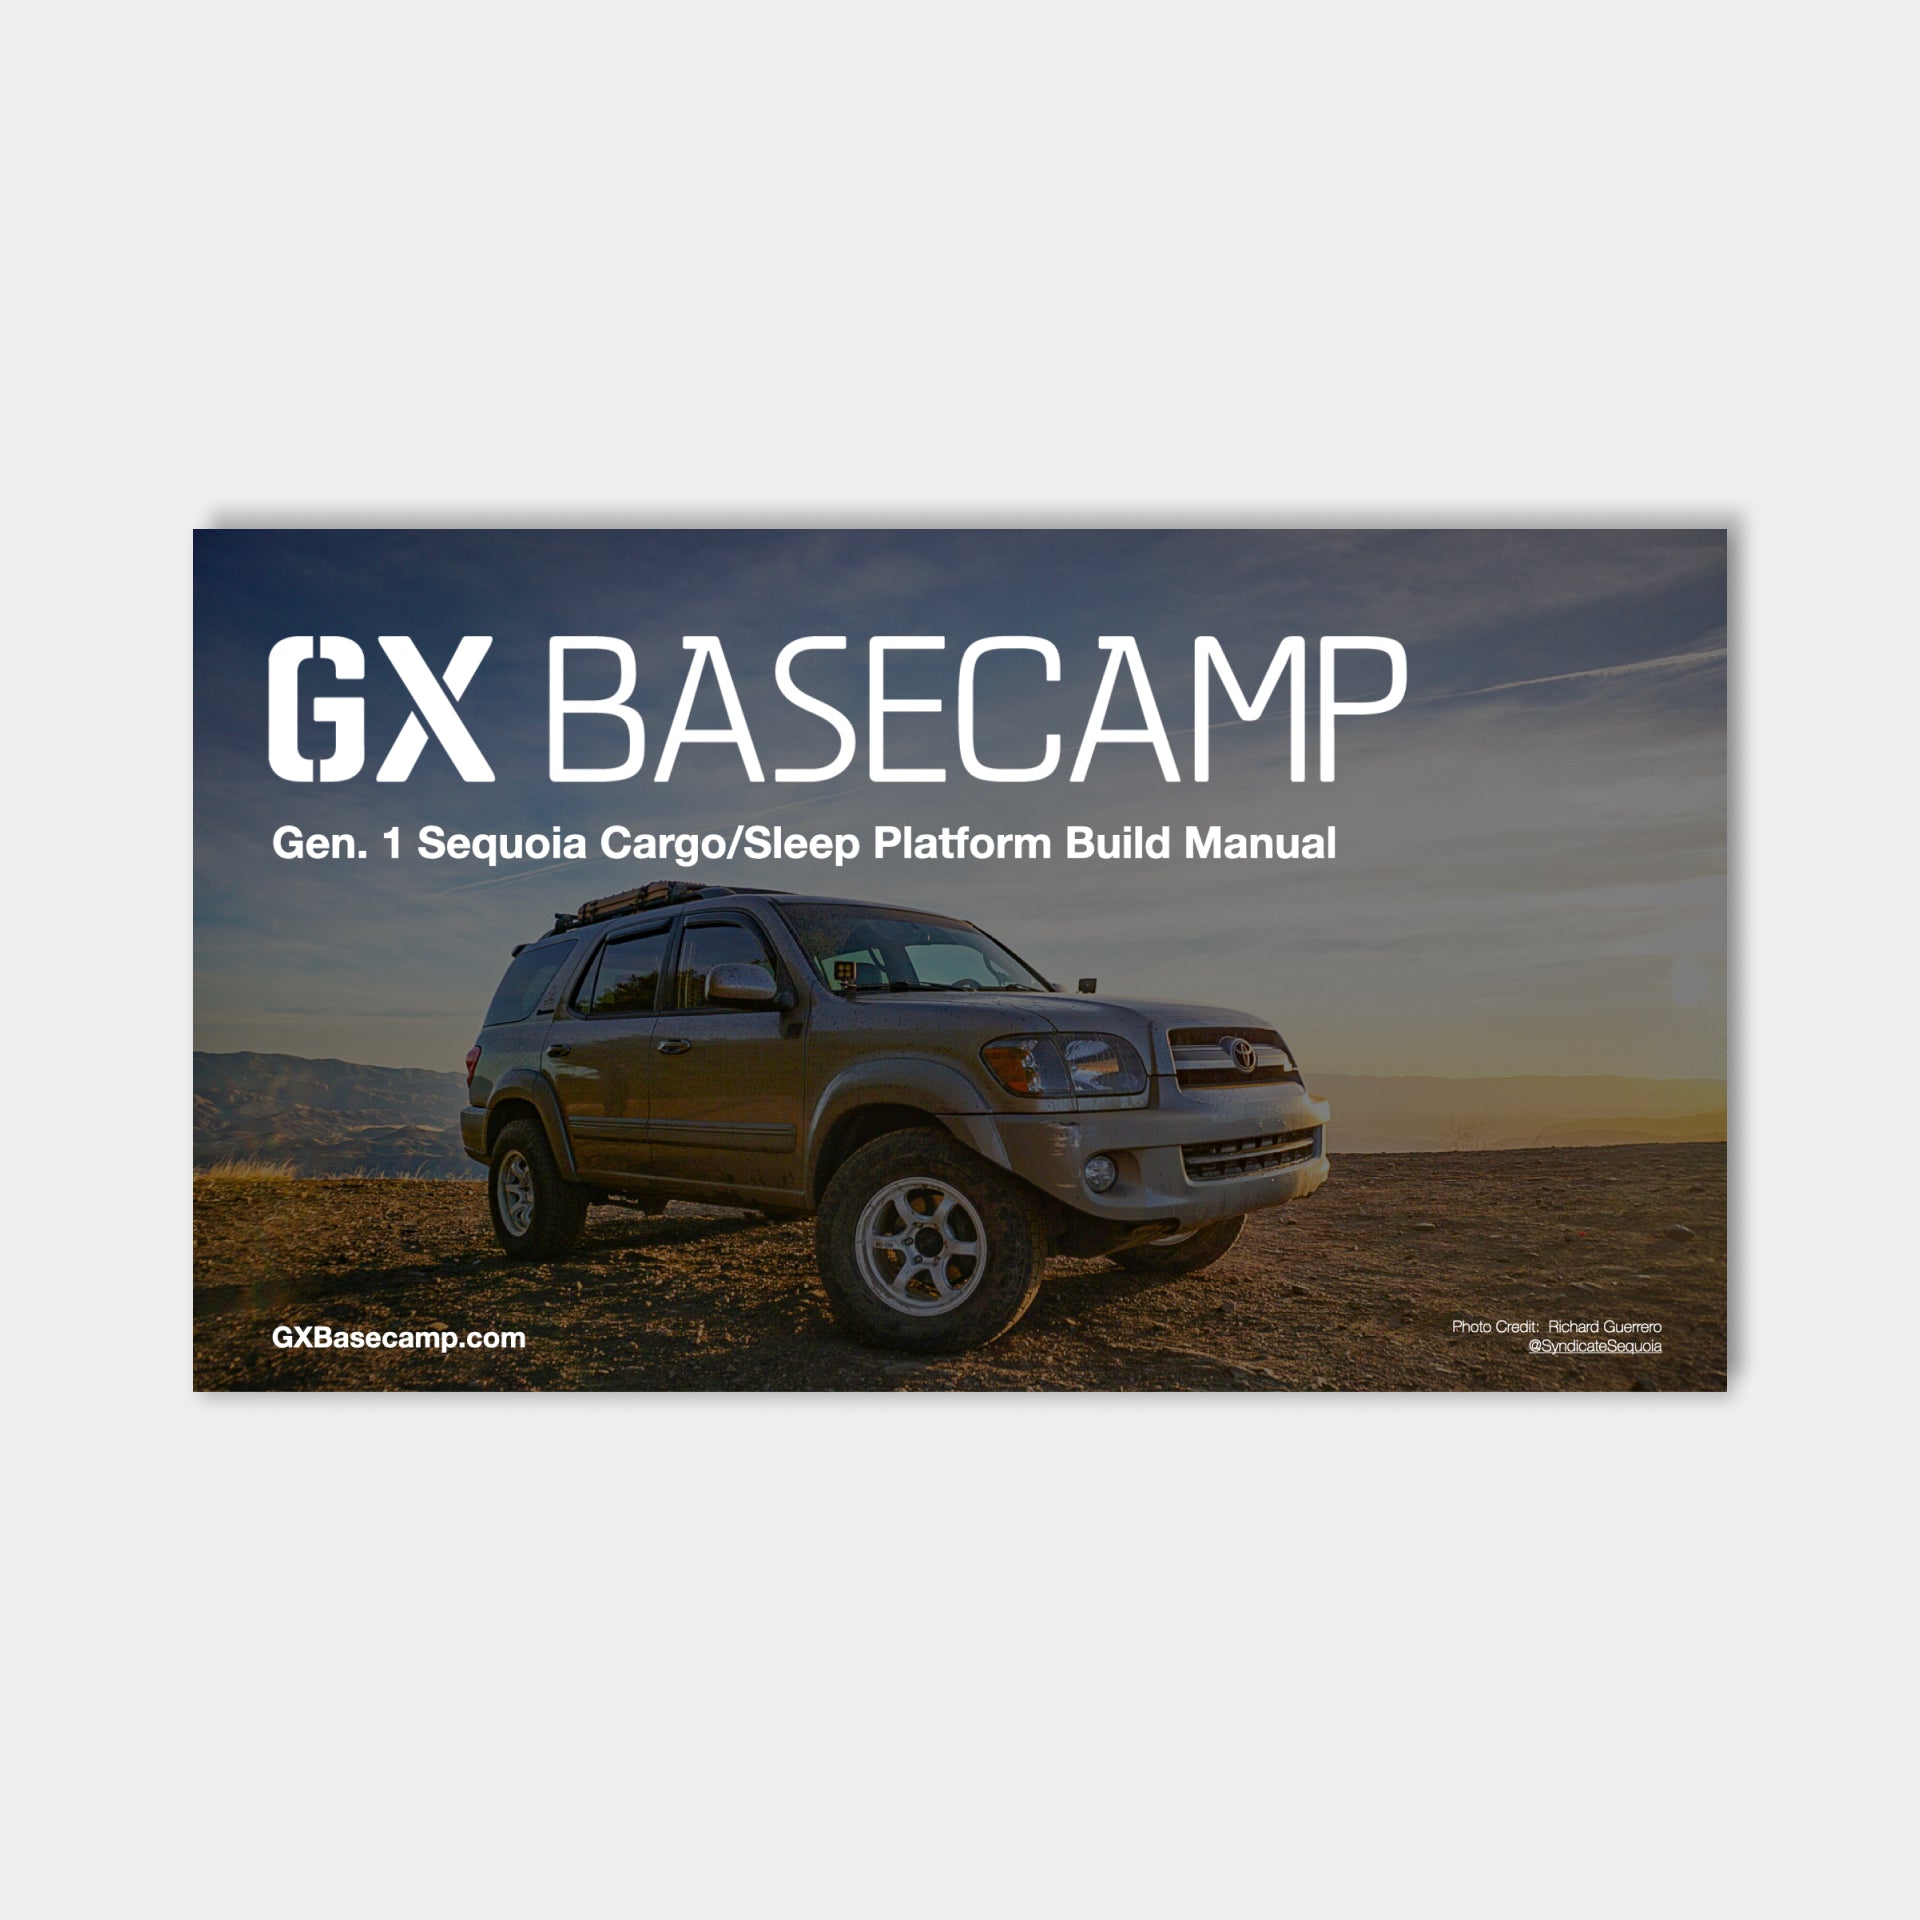 1st Gen. Toyota Sequoia Platform Build Manual - Go Xplore Basecamp